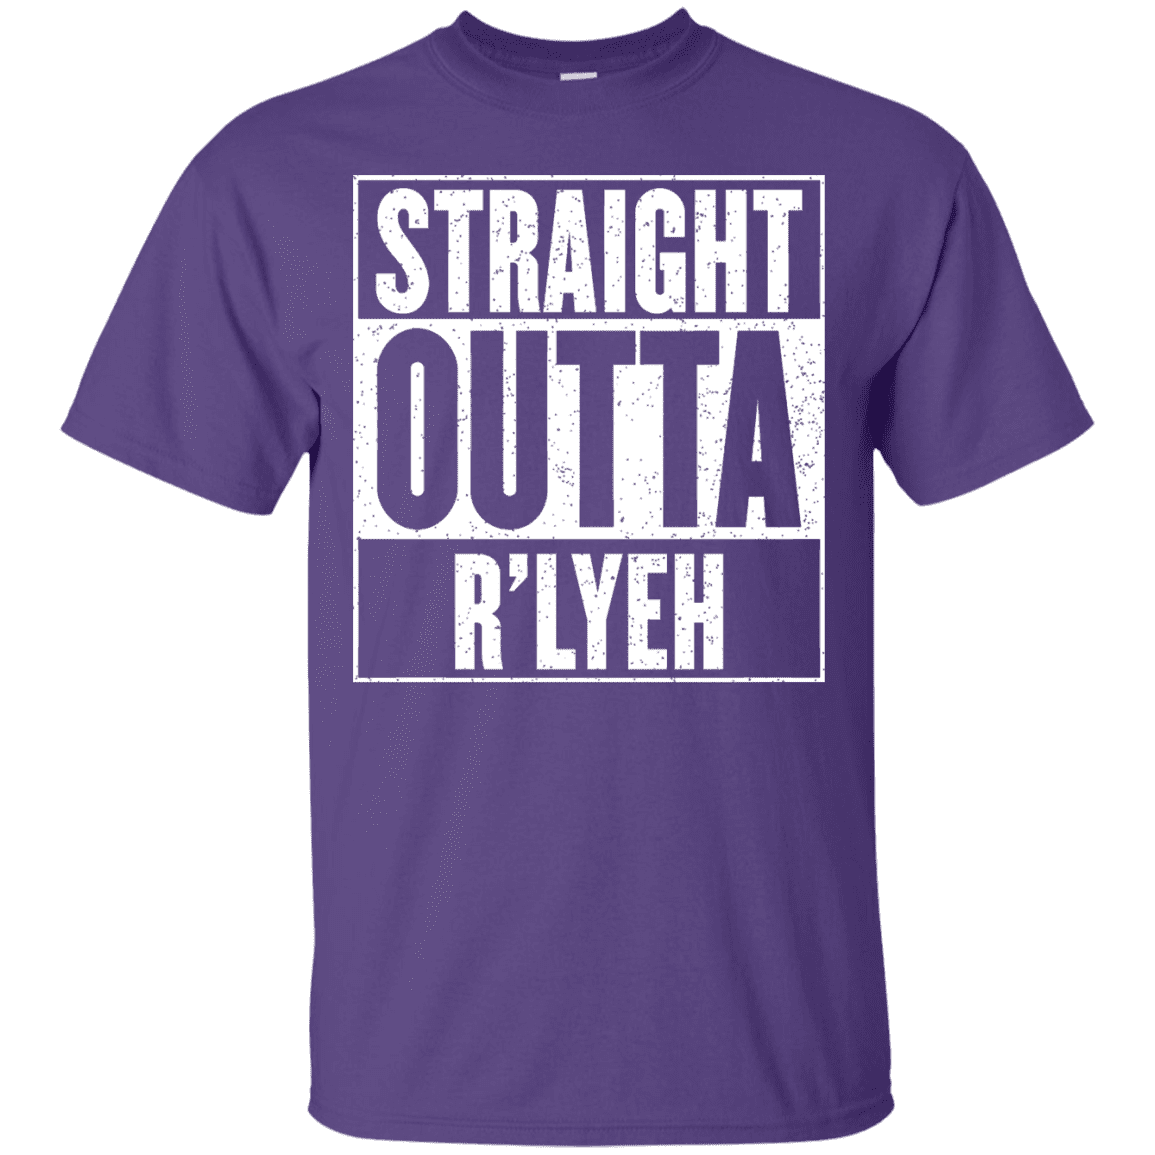 T-Shirts Purple / S Straight Outta R'lyeh T-Shirt